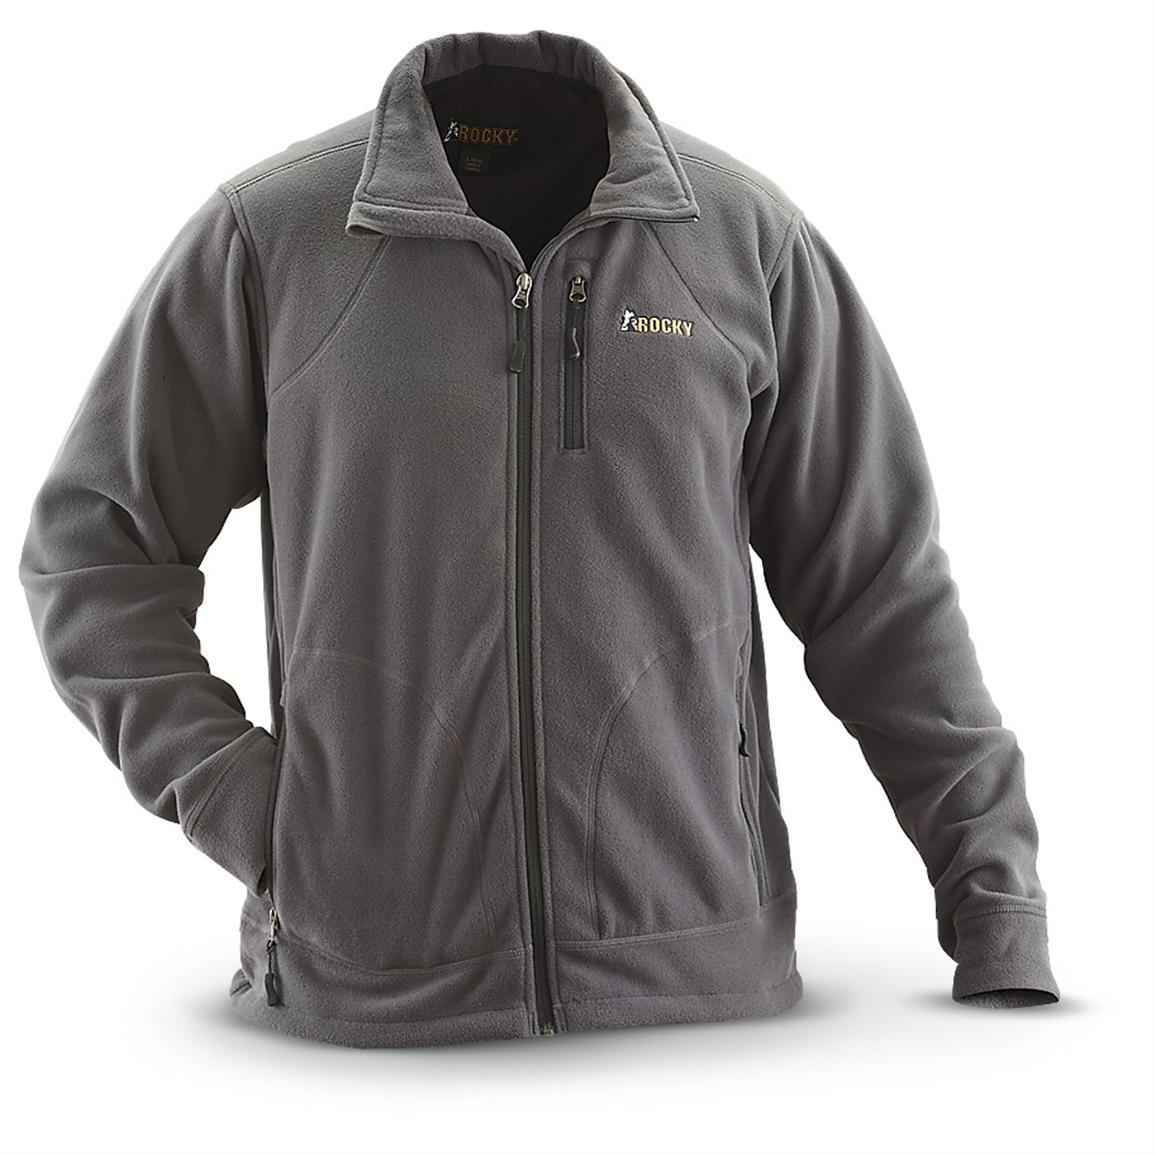 Rocky® Full - zip Fleece Jacket - 236583, Shirts at Sportsman's Guide